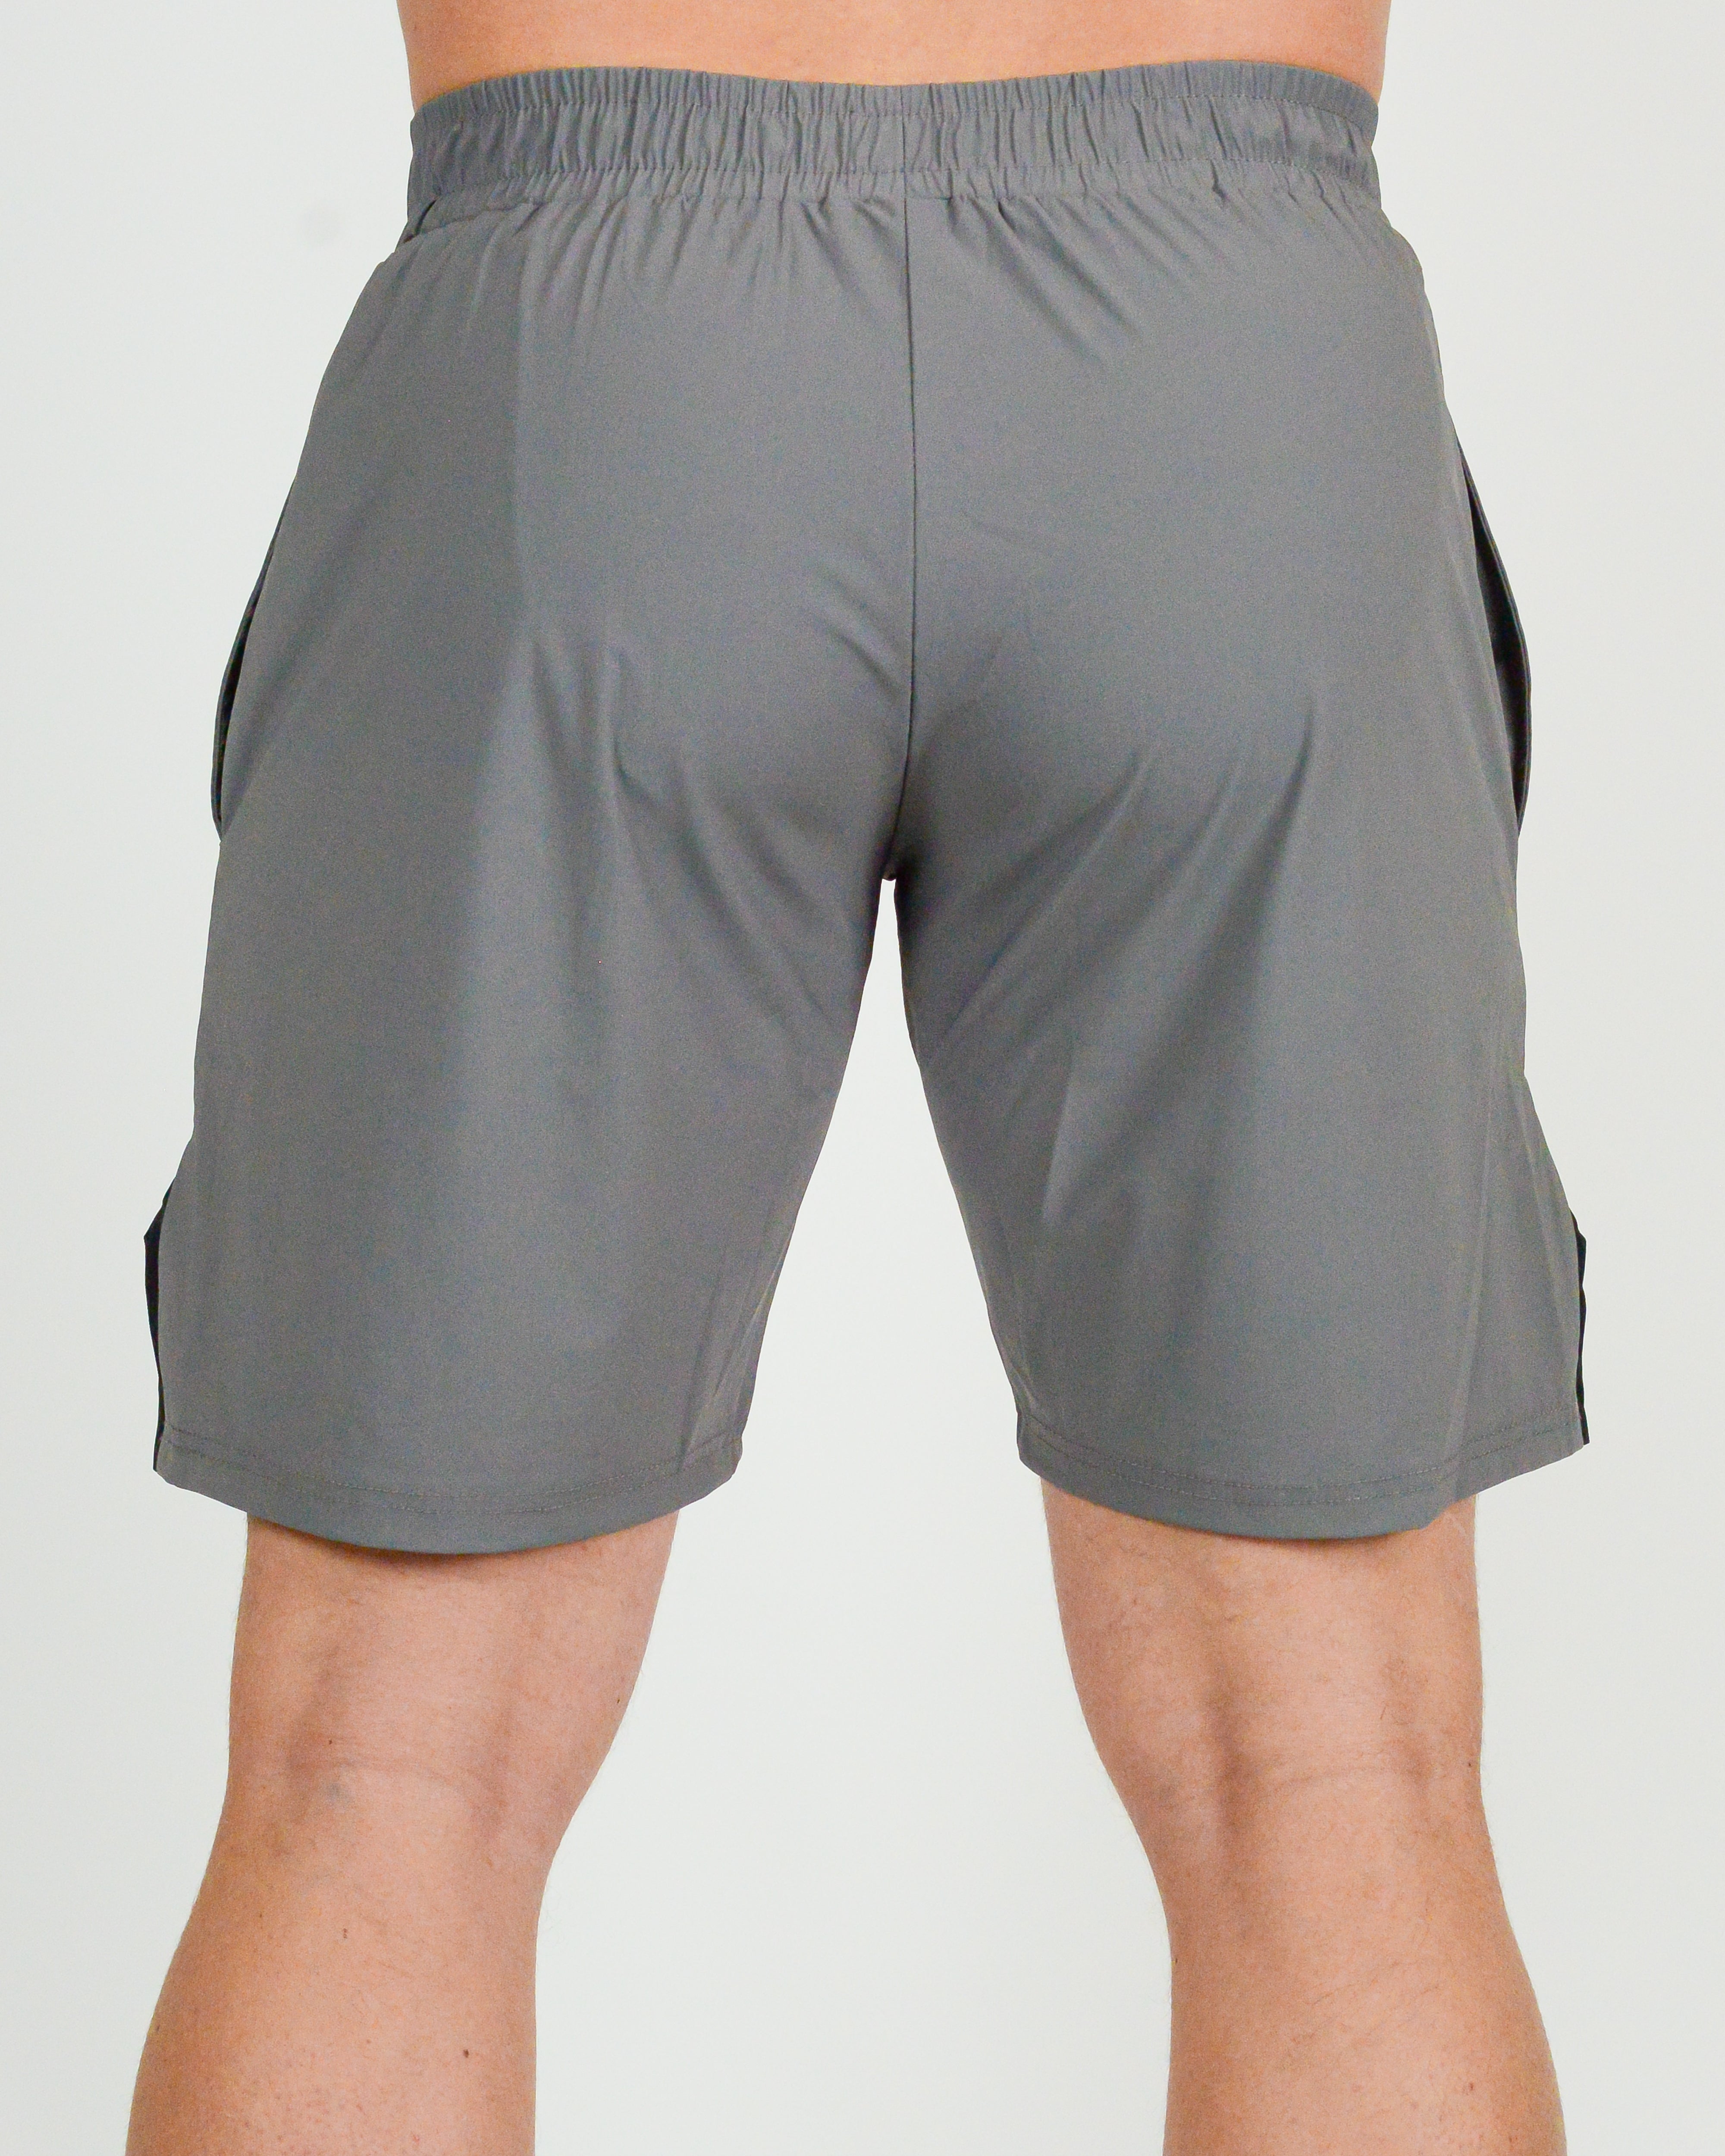 Flex Guard Shorts - Lounge Cut